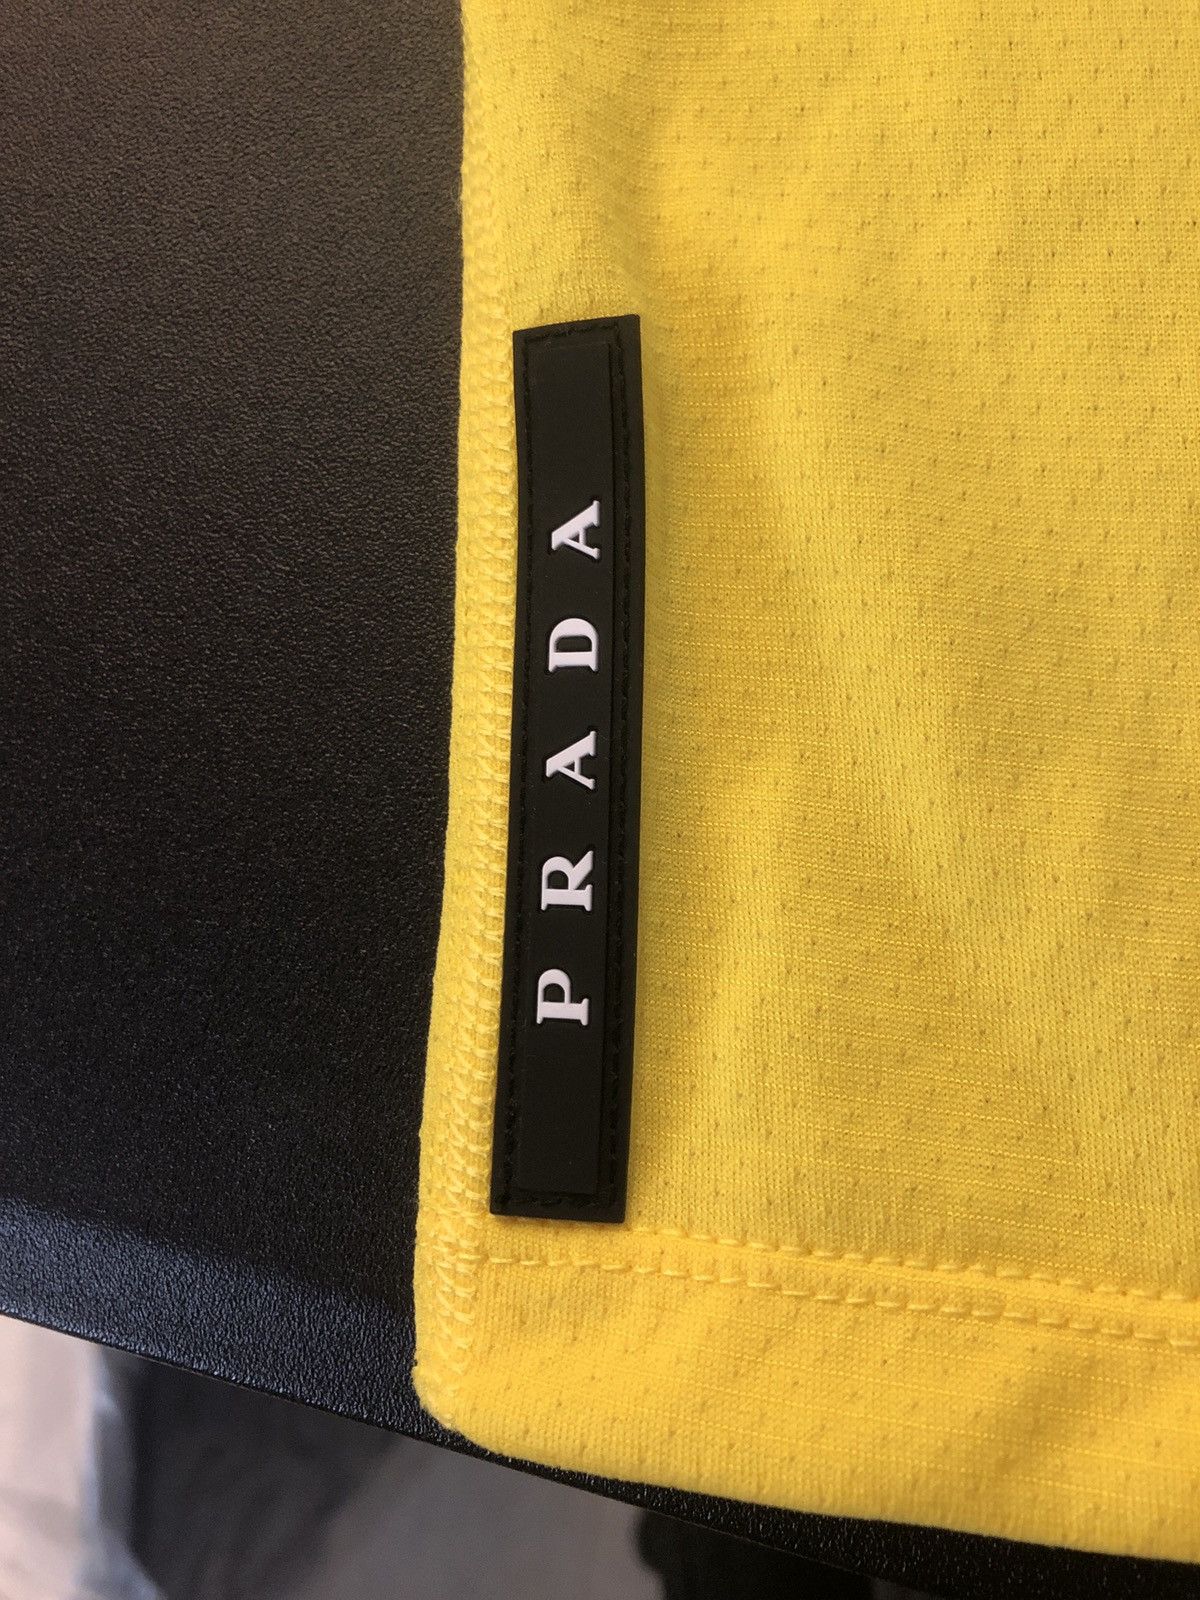 Prada Prada Yellow Dry Fit Shirt Size US M / EU 48-50 / 2 - 4 Thumbnail